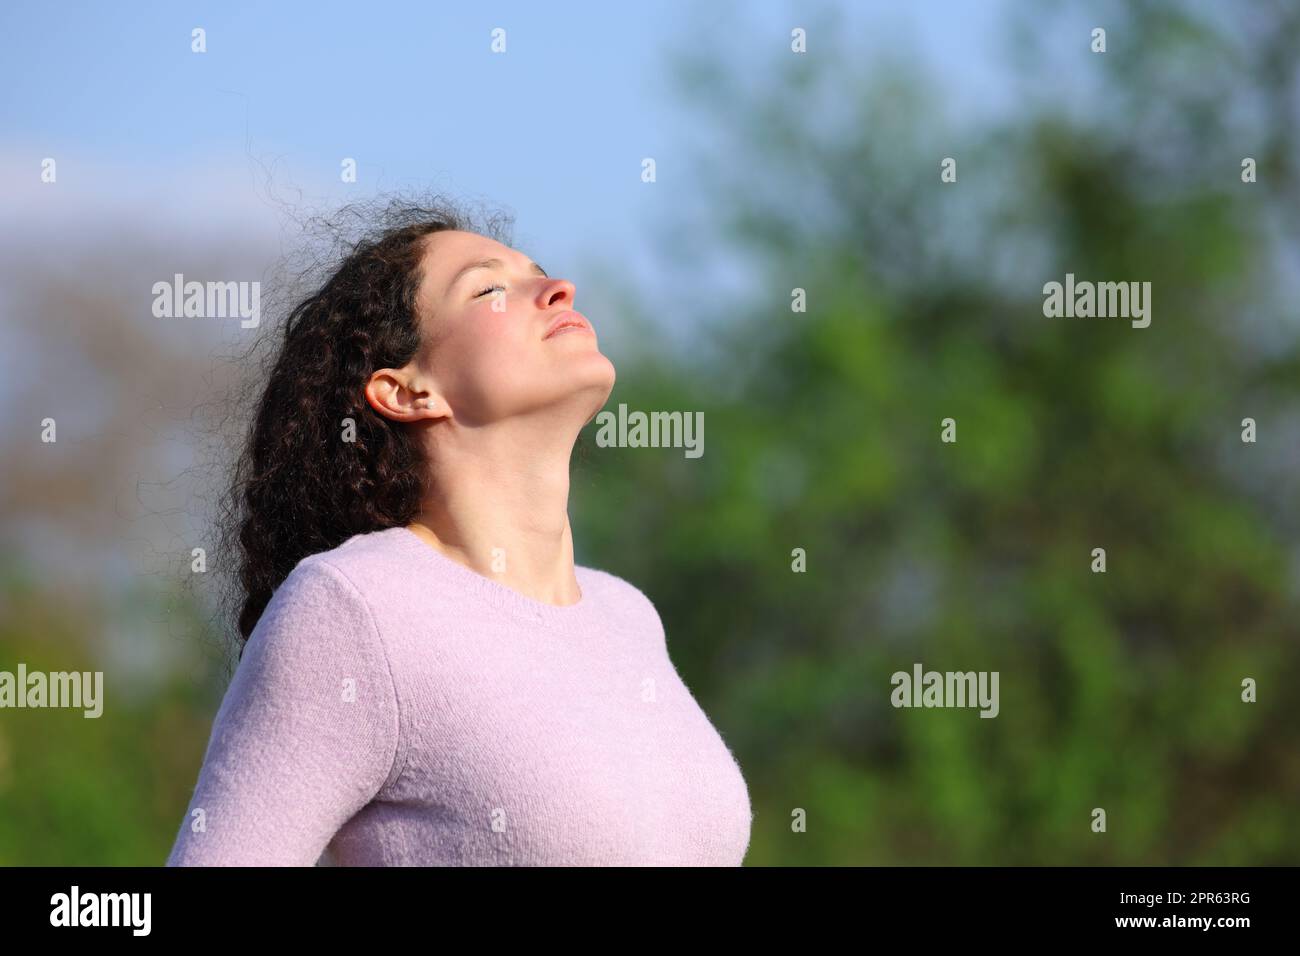 La mujer con el pelo rizado respira aire fresco Foto de stock